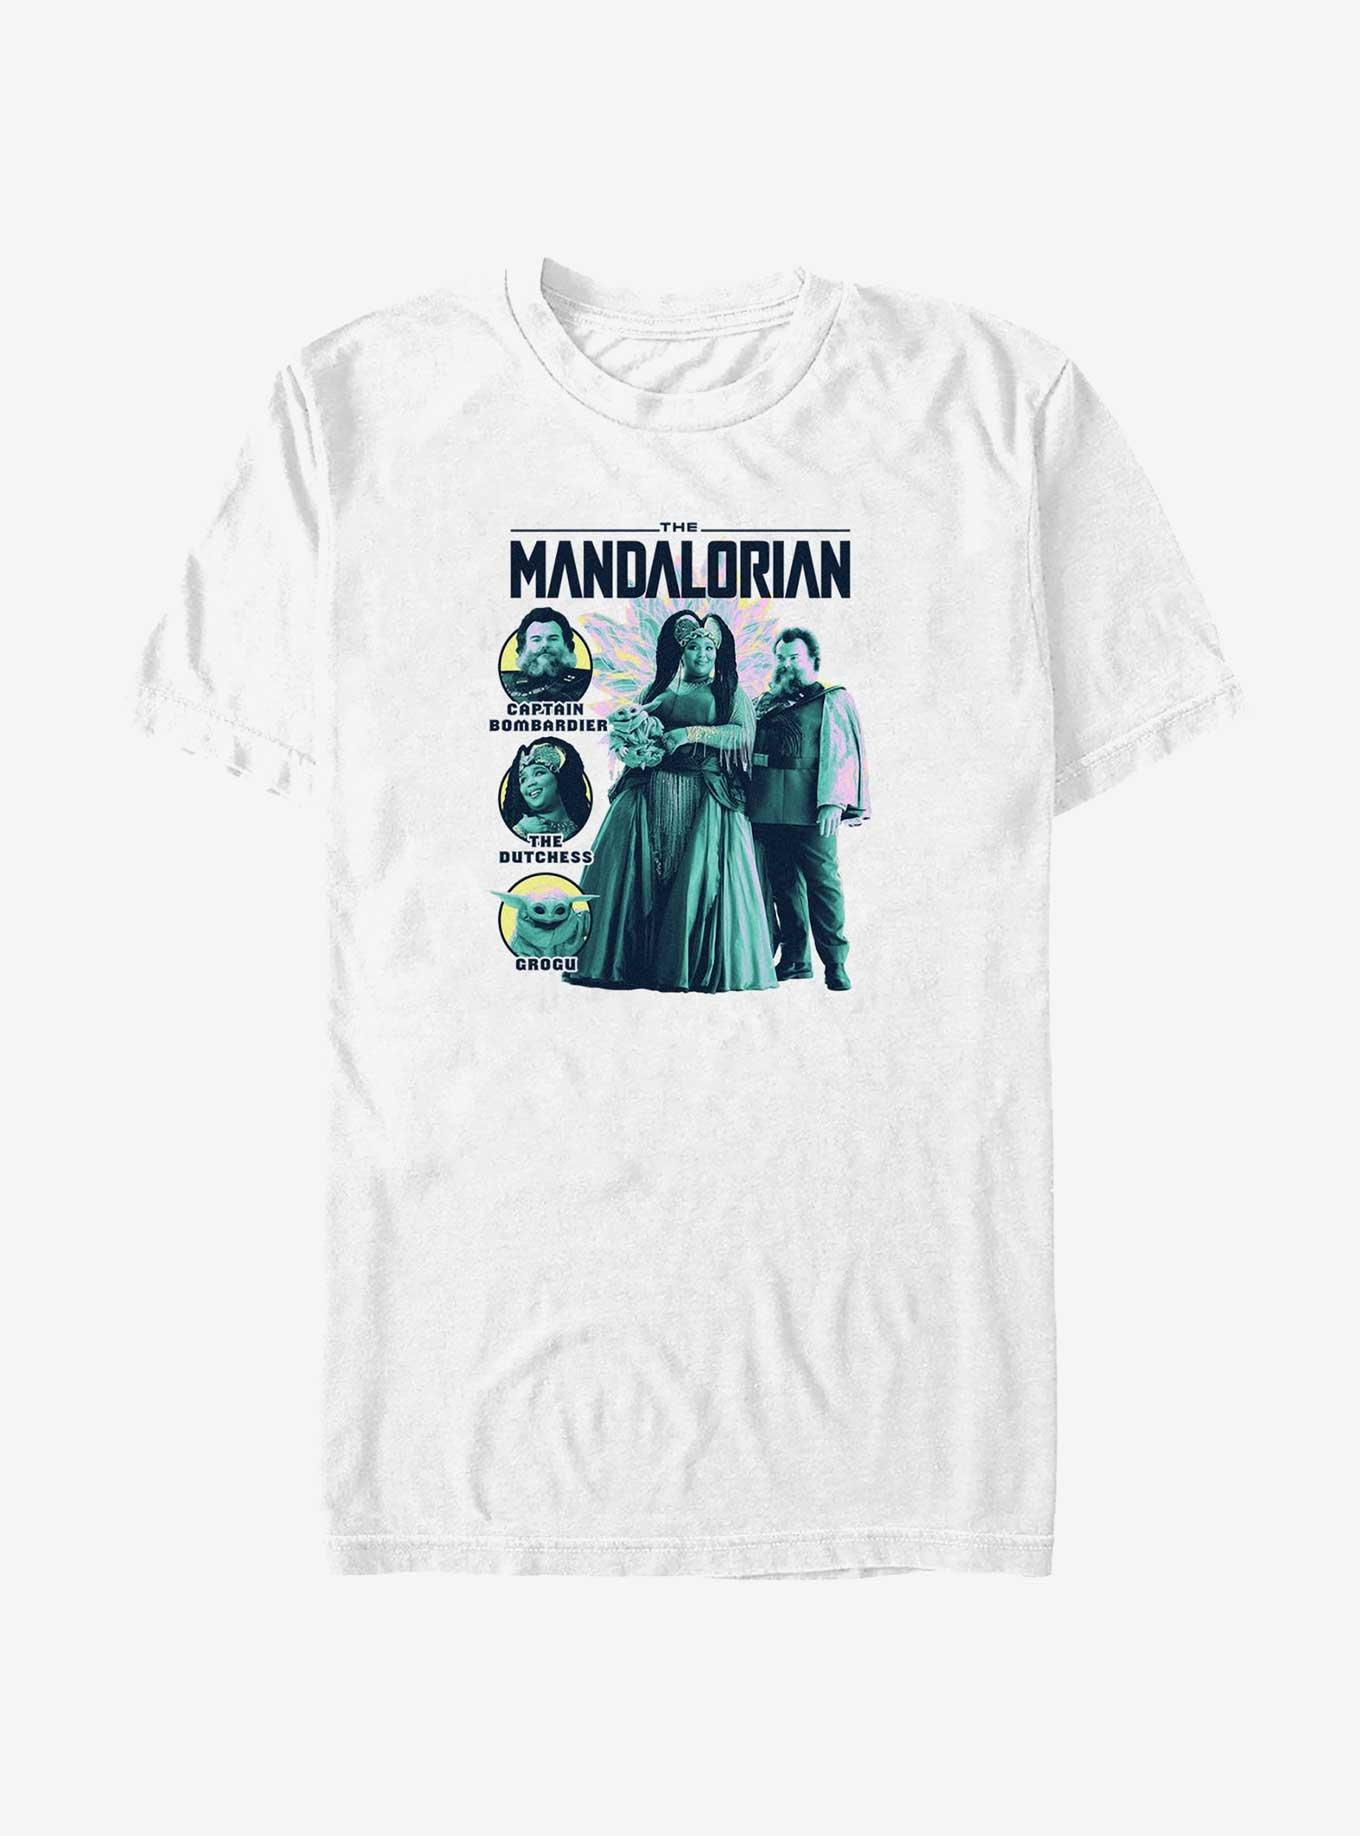 Star Wars The Mandalorian Captain and Dutchess Big & Tall T-Shirt